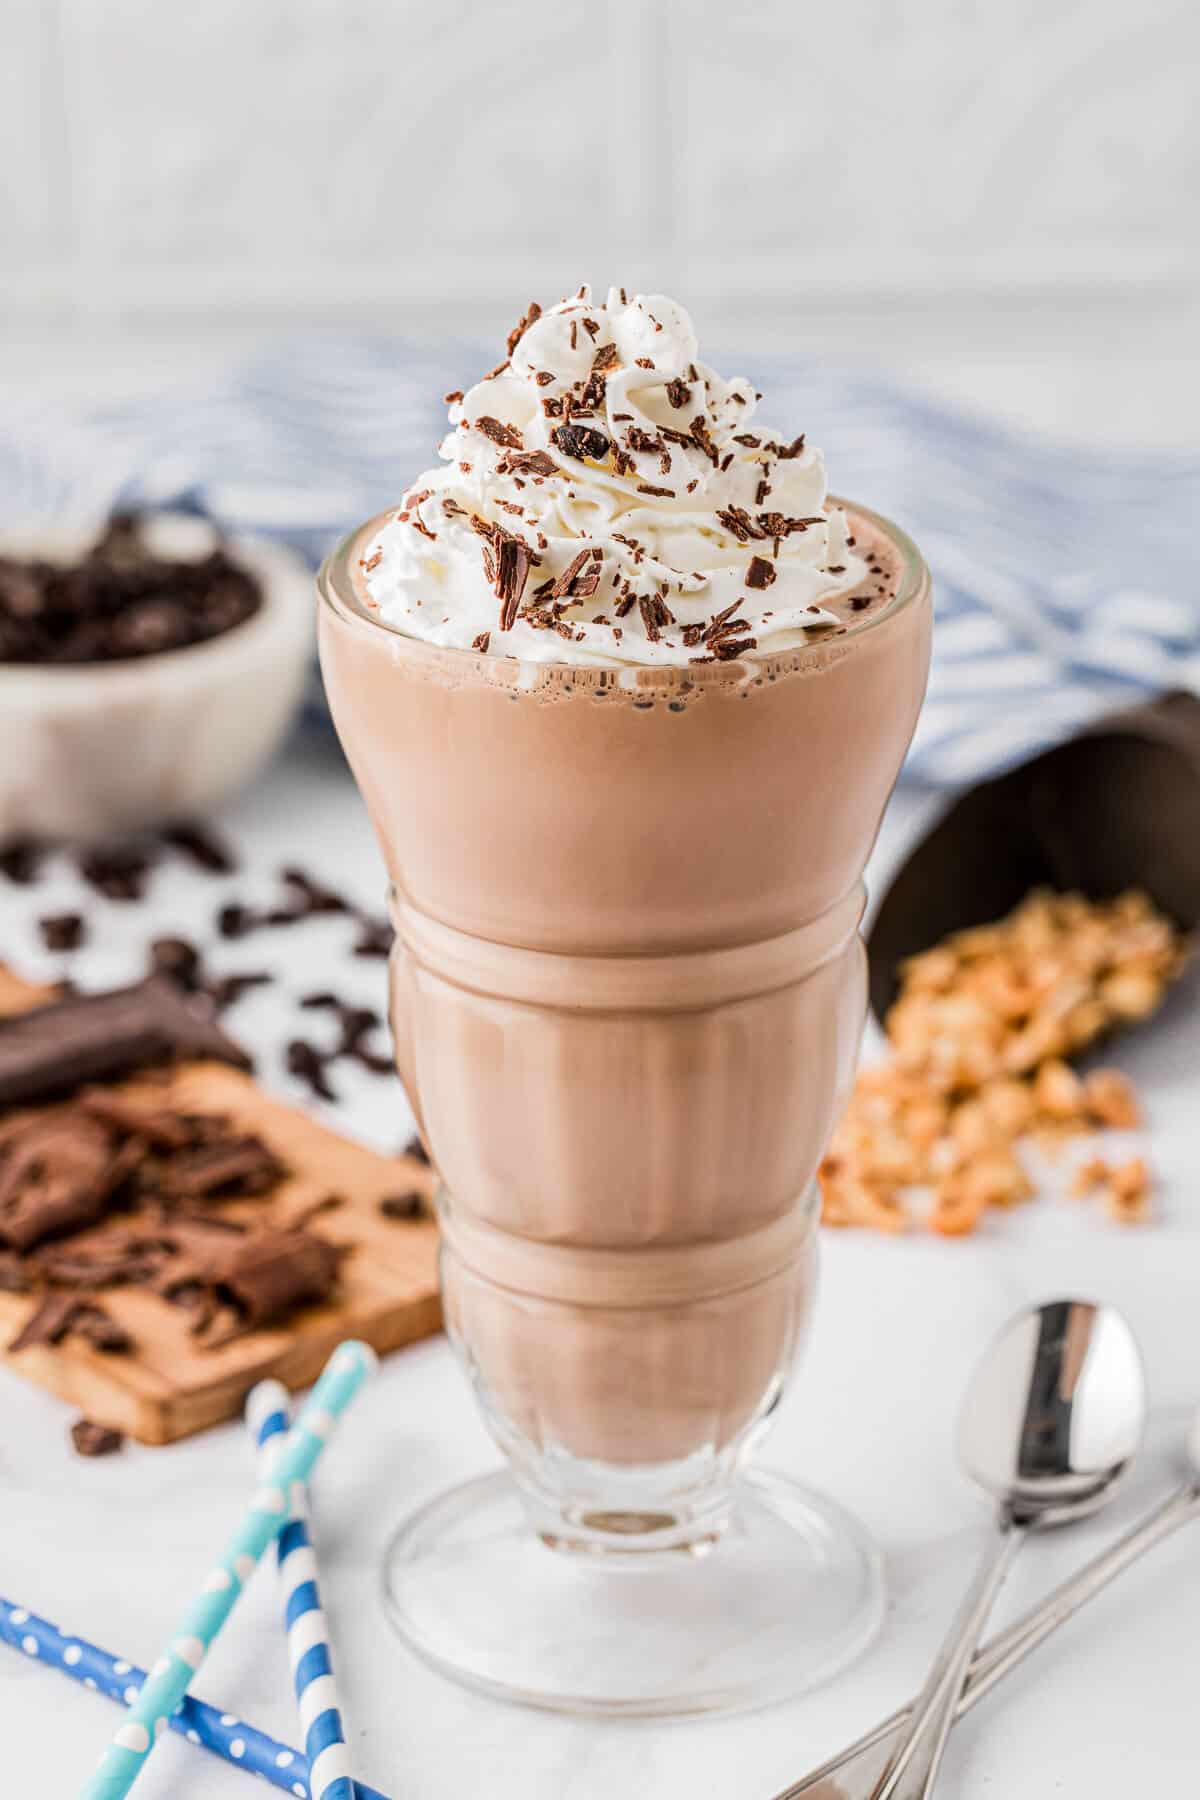 A nutella coffee milkshake in a glass.